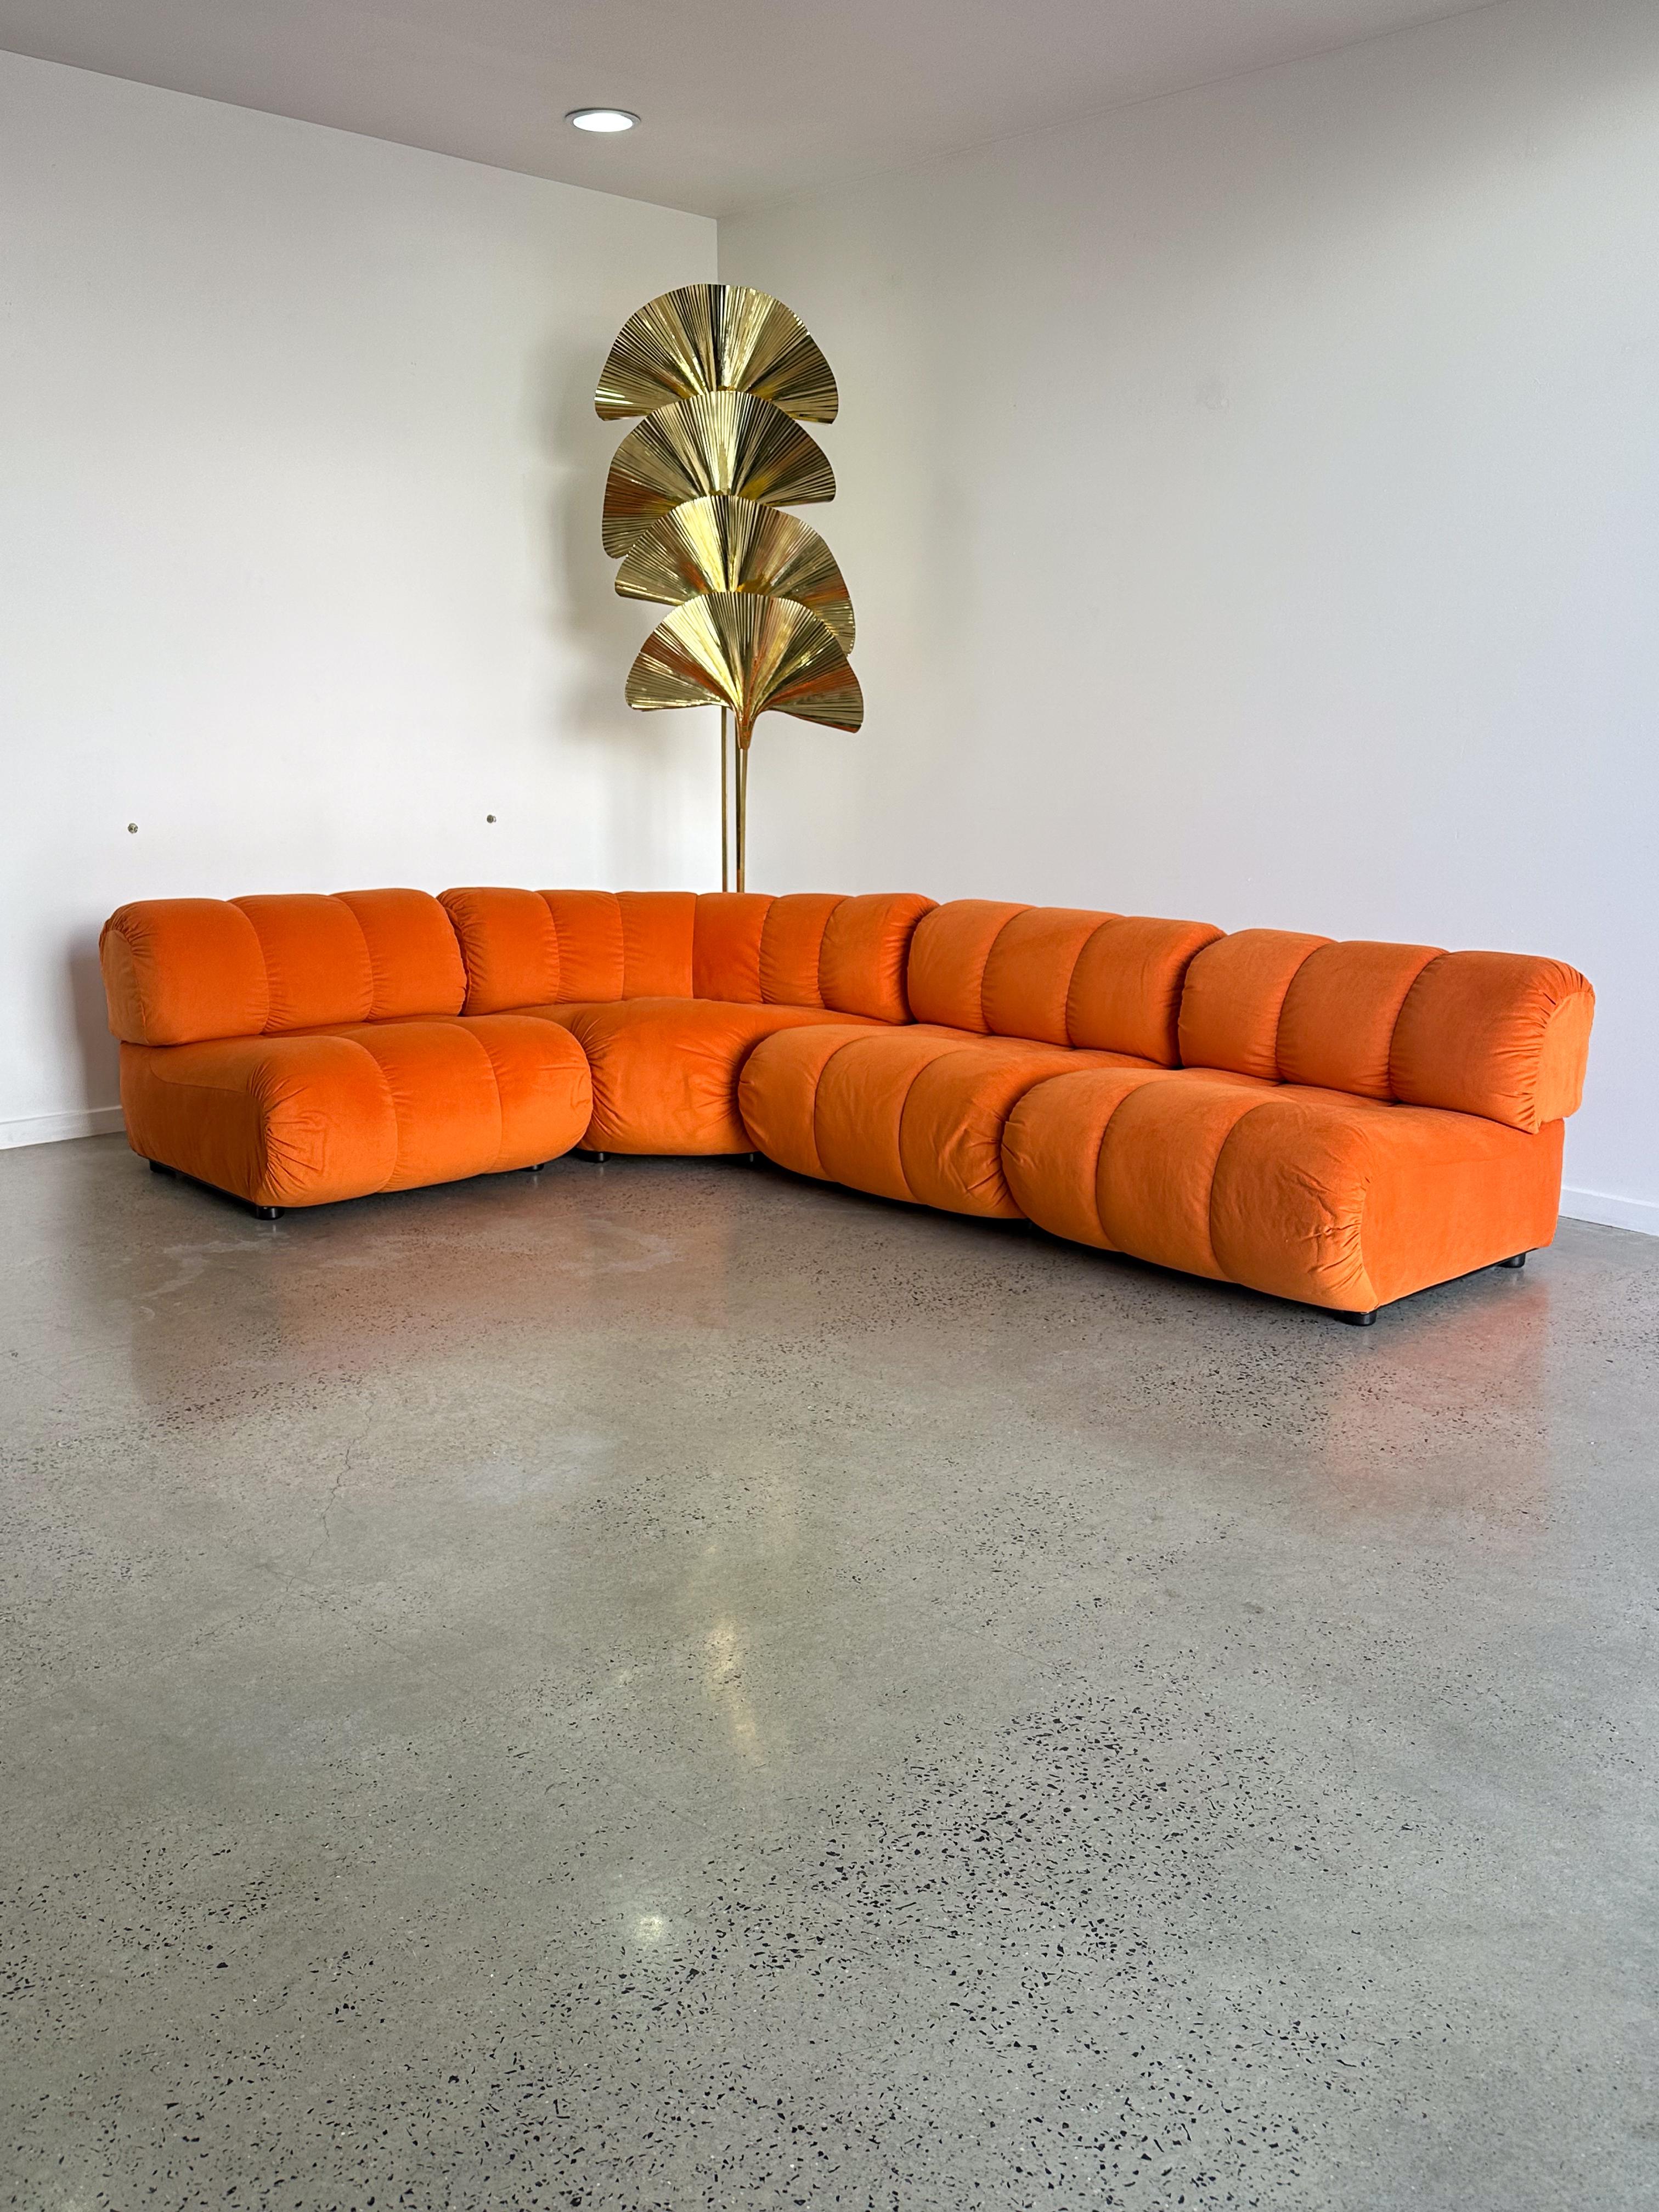 Giuseppe Munari pour Poltronova - Ensemble de quatre canapés orange modulaires des années 1970 en vente 3